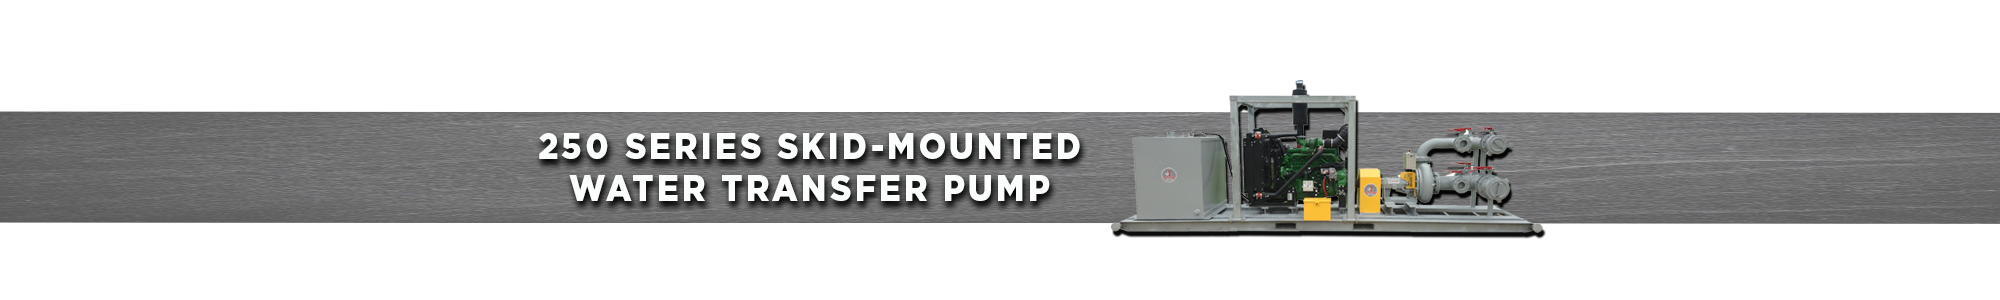 250 Series Skid-Mounted water transfer pump